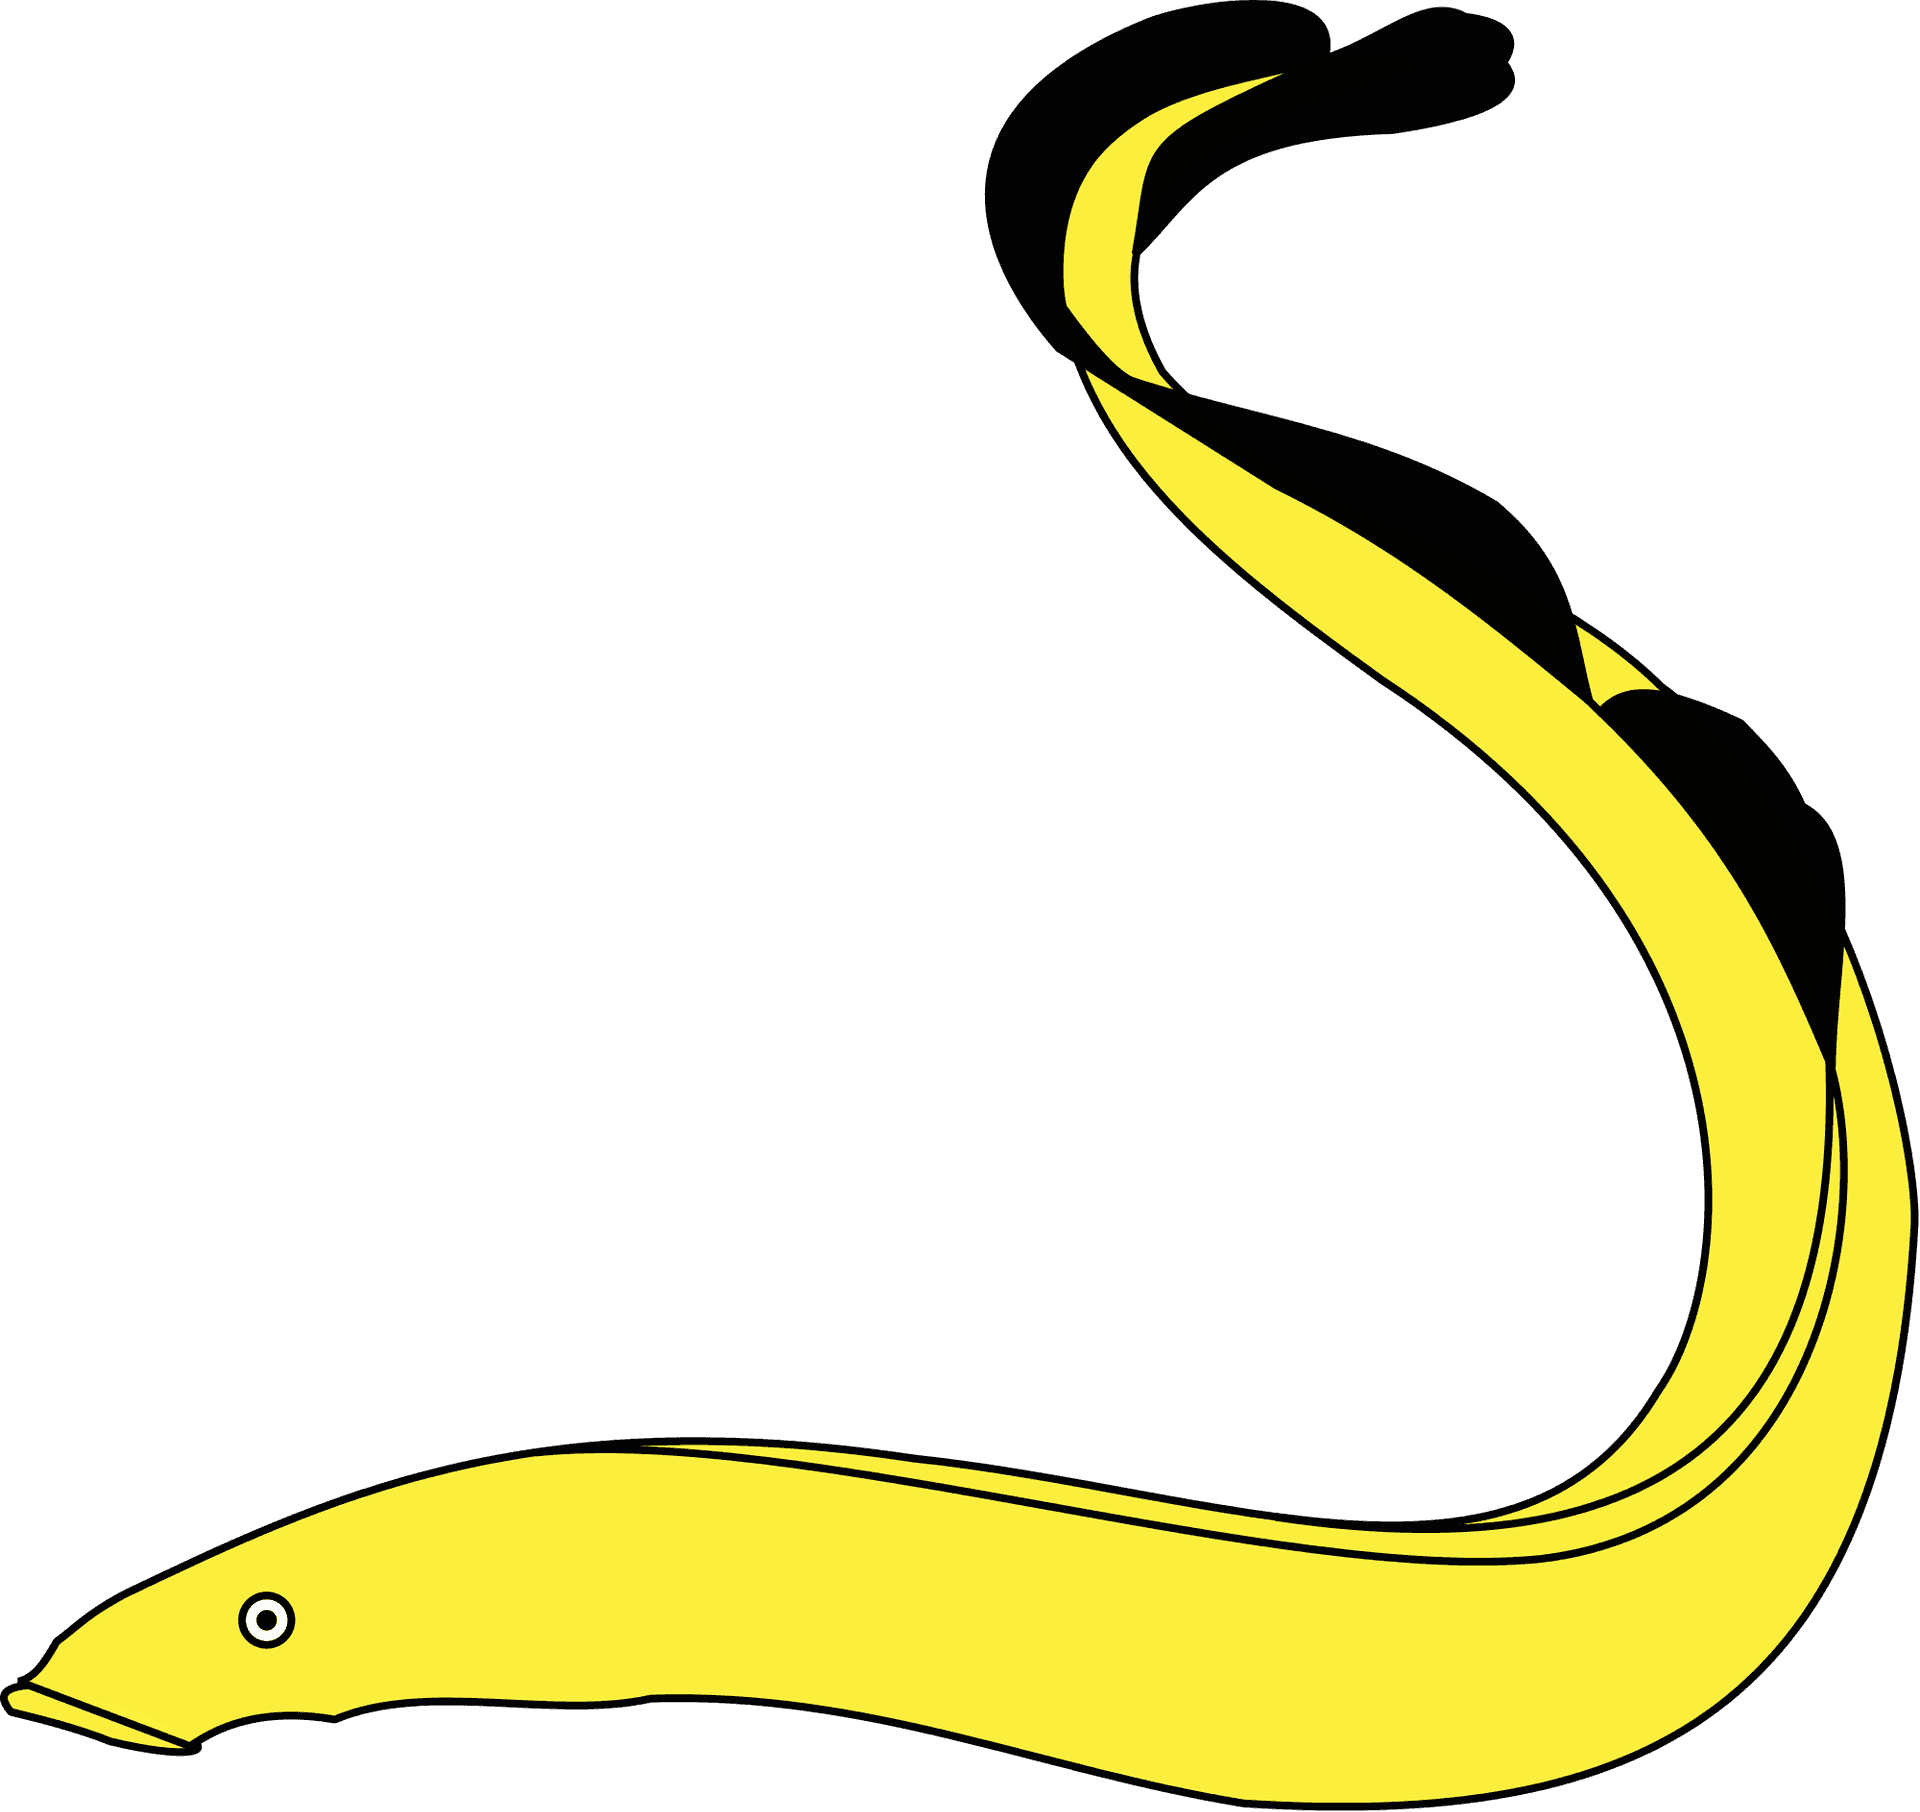 Yellowand Black Eel Illustration.png PNG